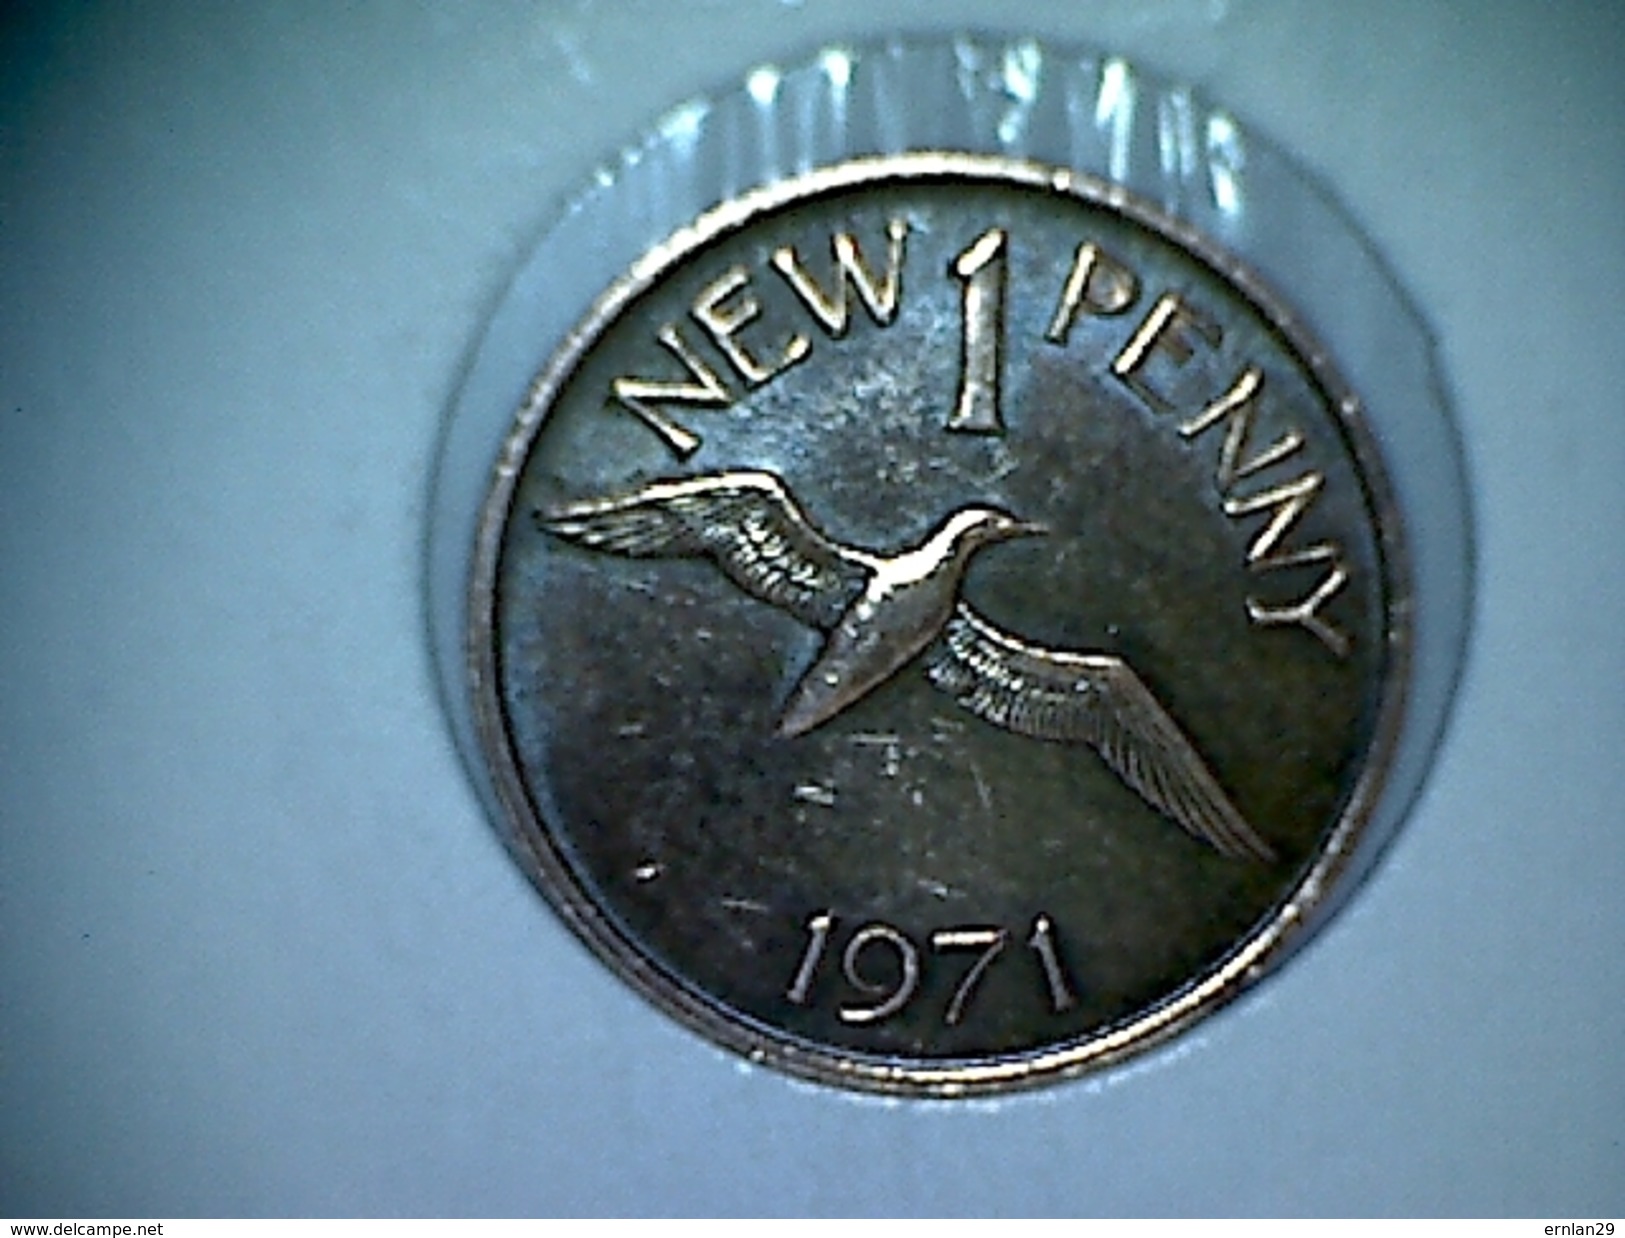 Guernsey 1 New Penny 1971 - Guernsey